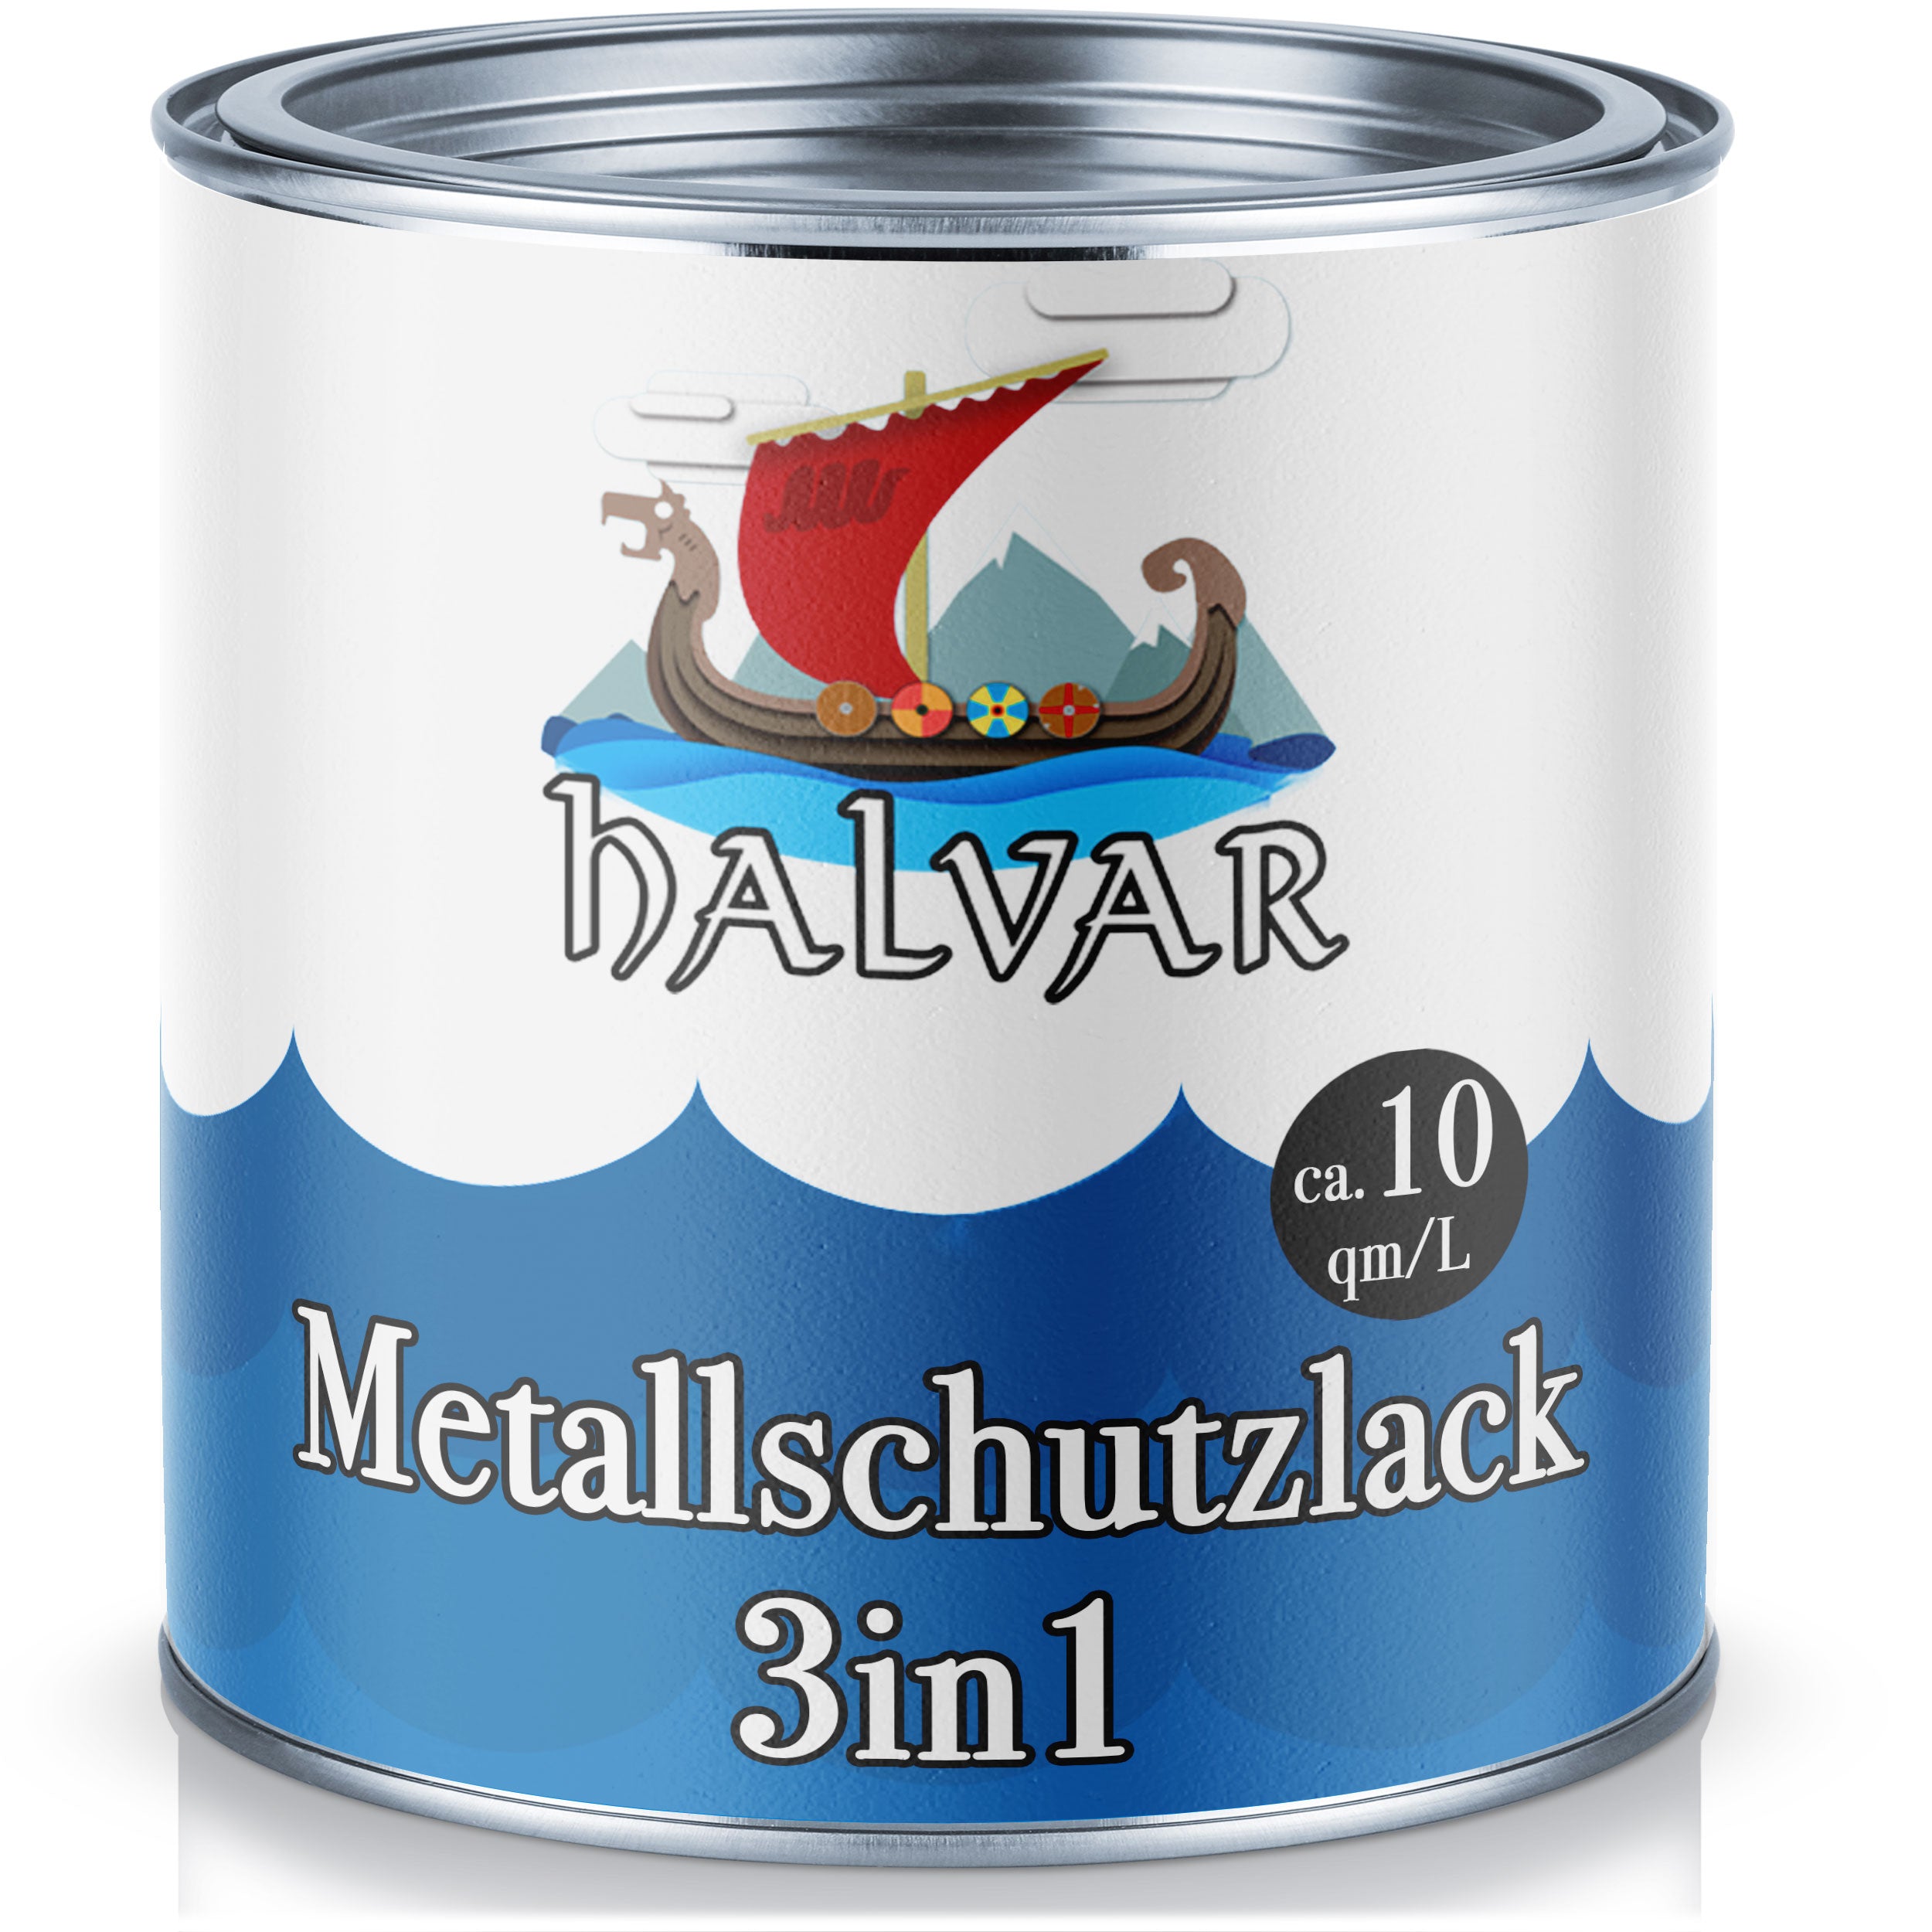 Halvar Metallschutzlack 3 in 1 - Metalllack